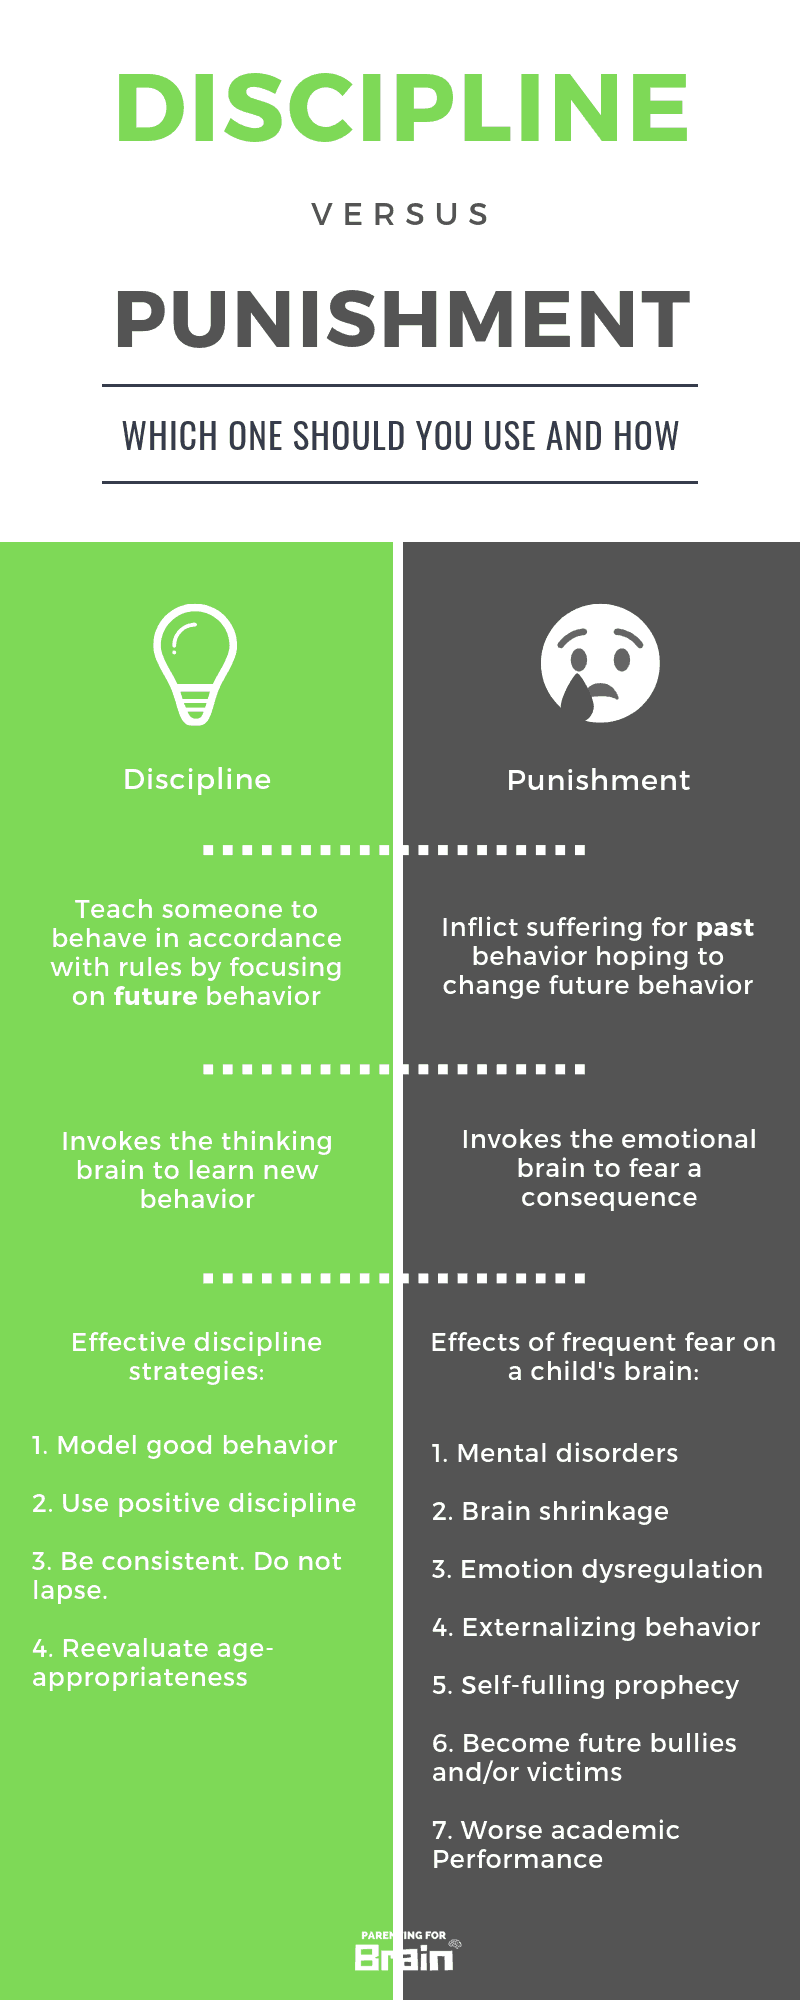 Punishment versus discipline infographic showing differences in discipline and punishment